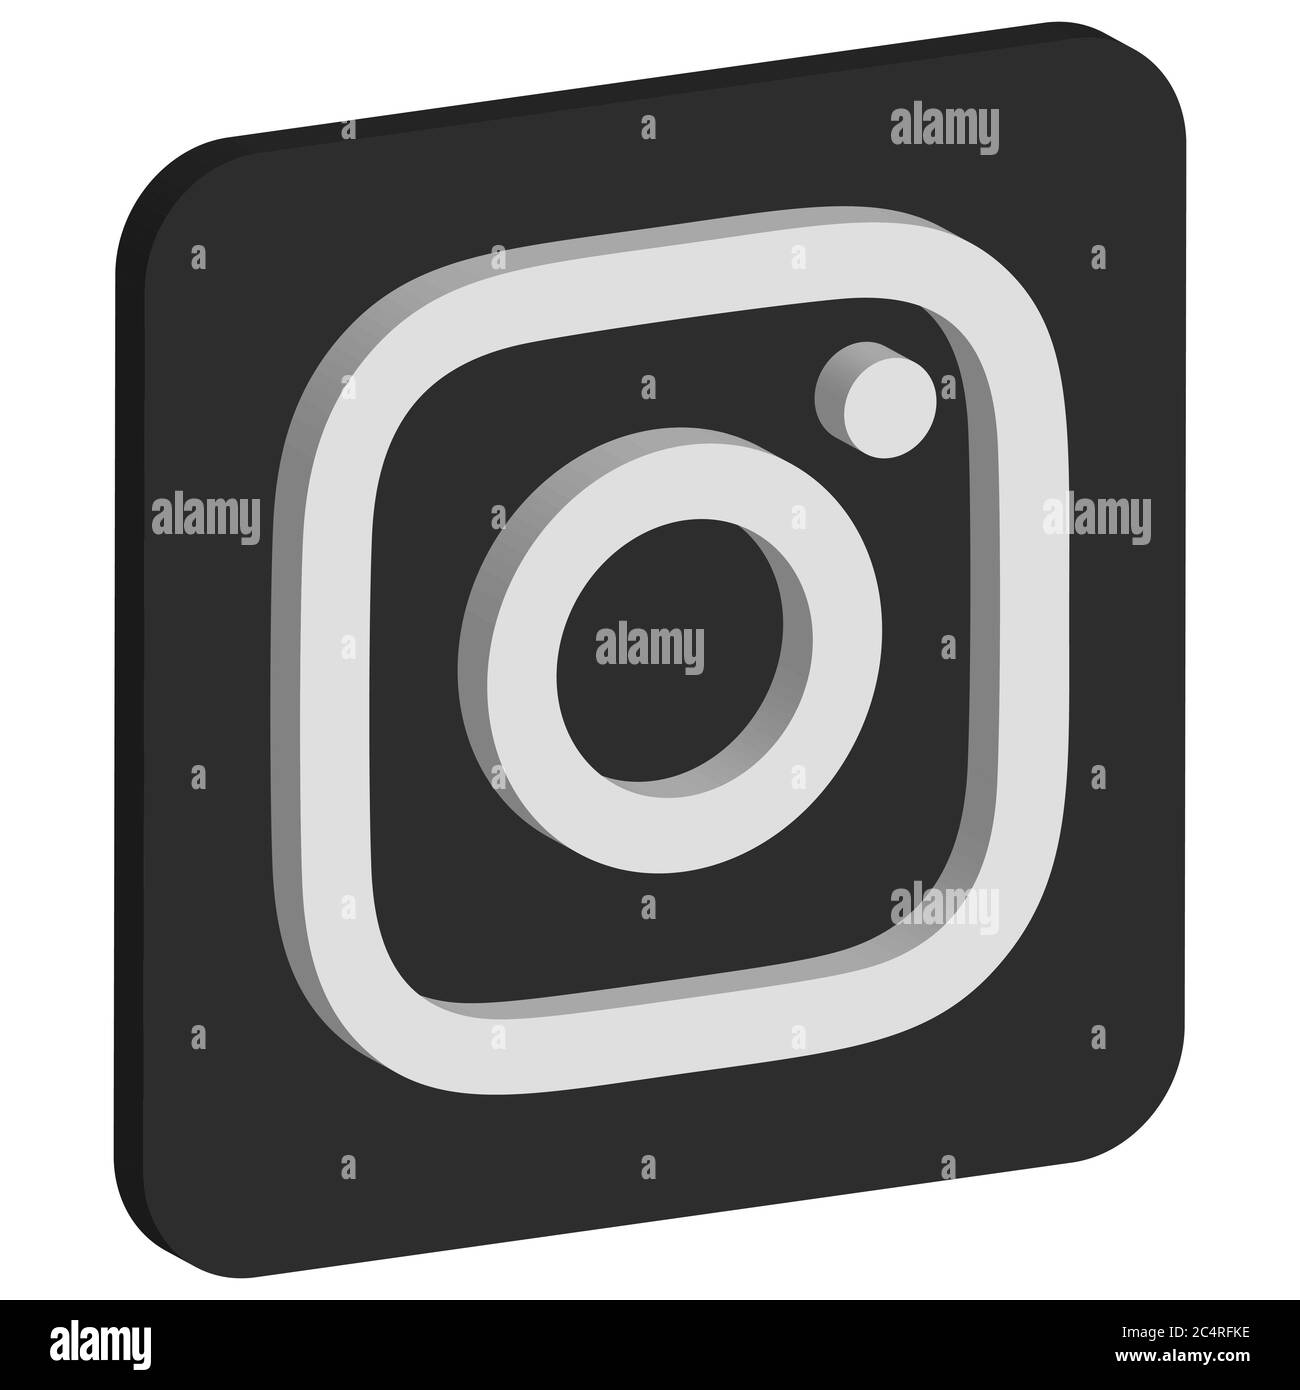 VORONEZH, RUSSIA - NOVEMBER 21, 2019: Instagram logo isometric square icon in black color Stock Vector